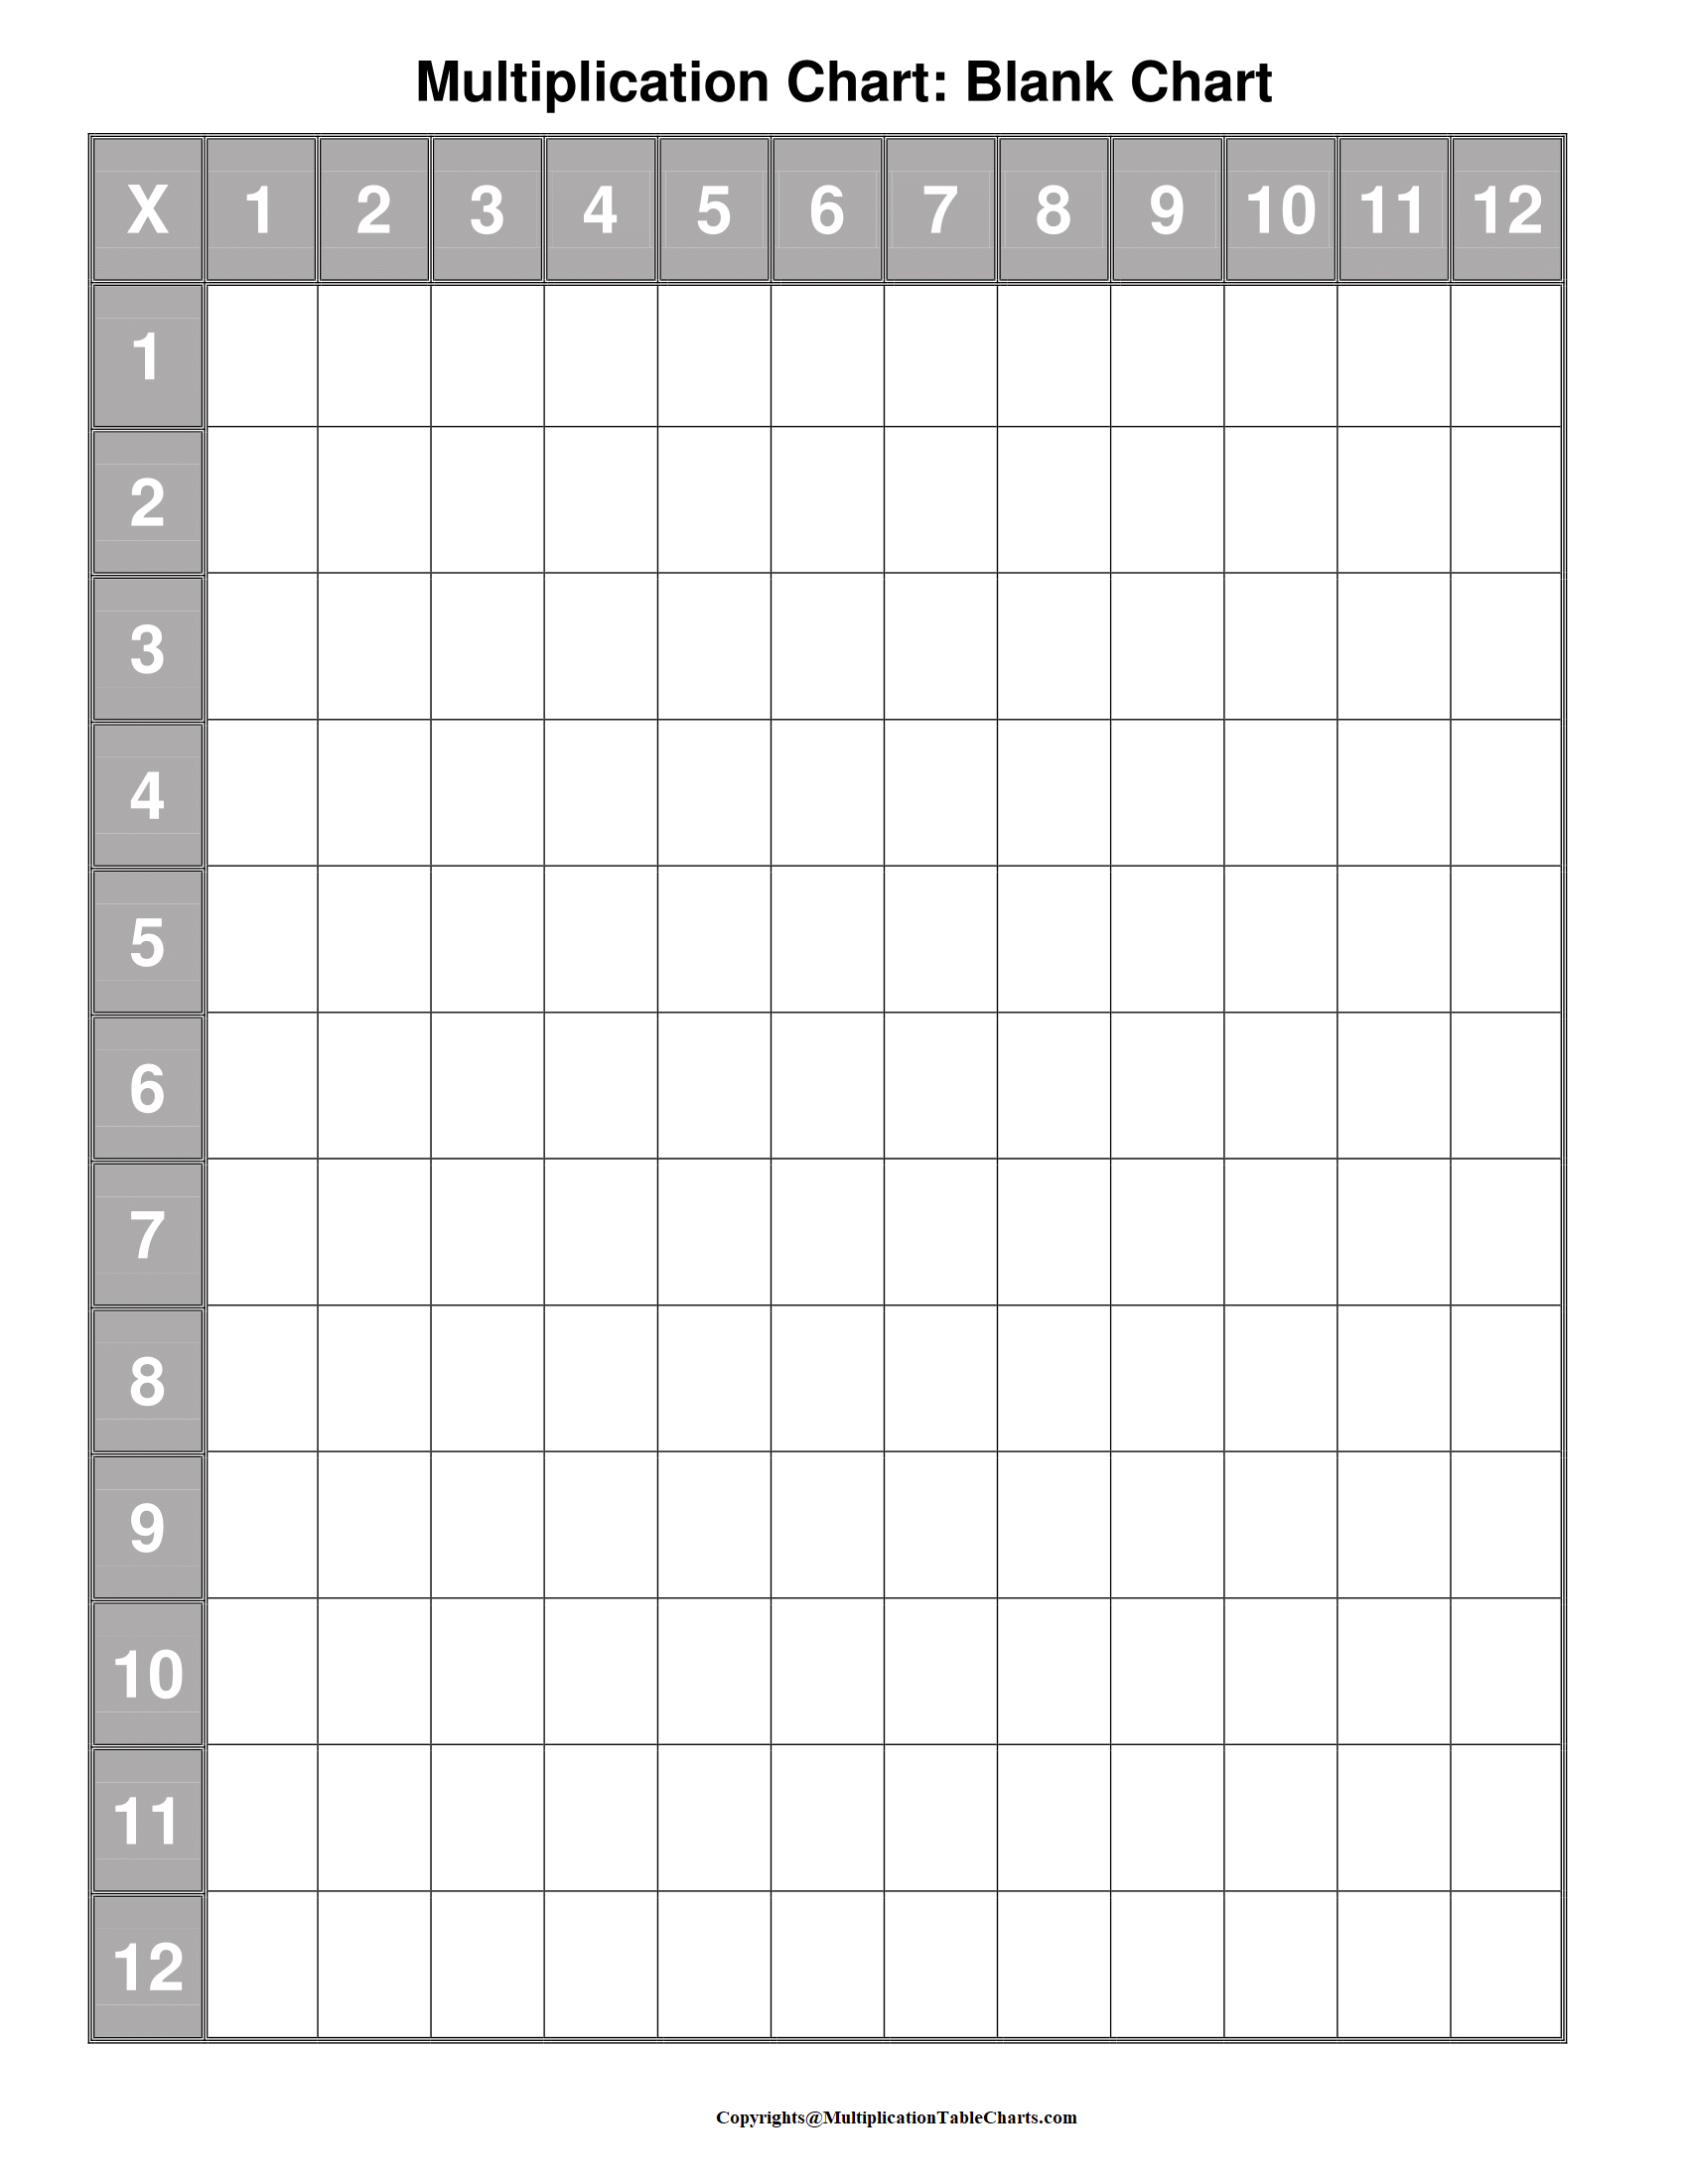 Multiplication Chart Blank | Printable Multiplication Flash Cards